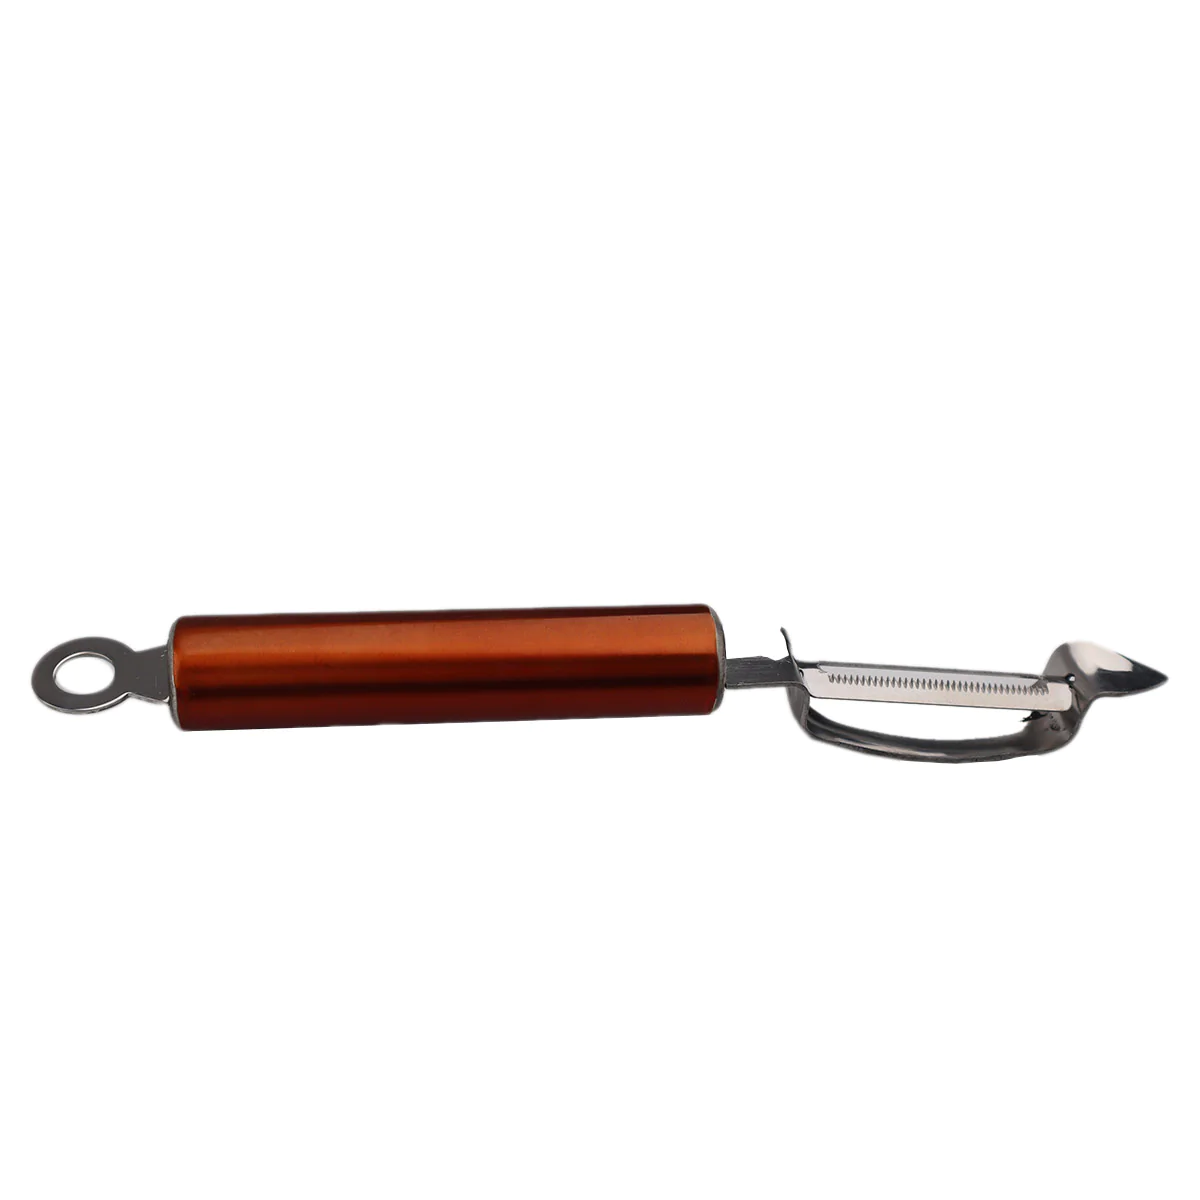 Chef Stainless Steel Vegetable Peeler - Peeling Tool With Copper Handle